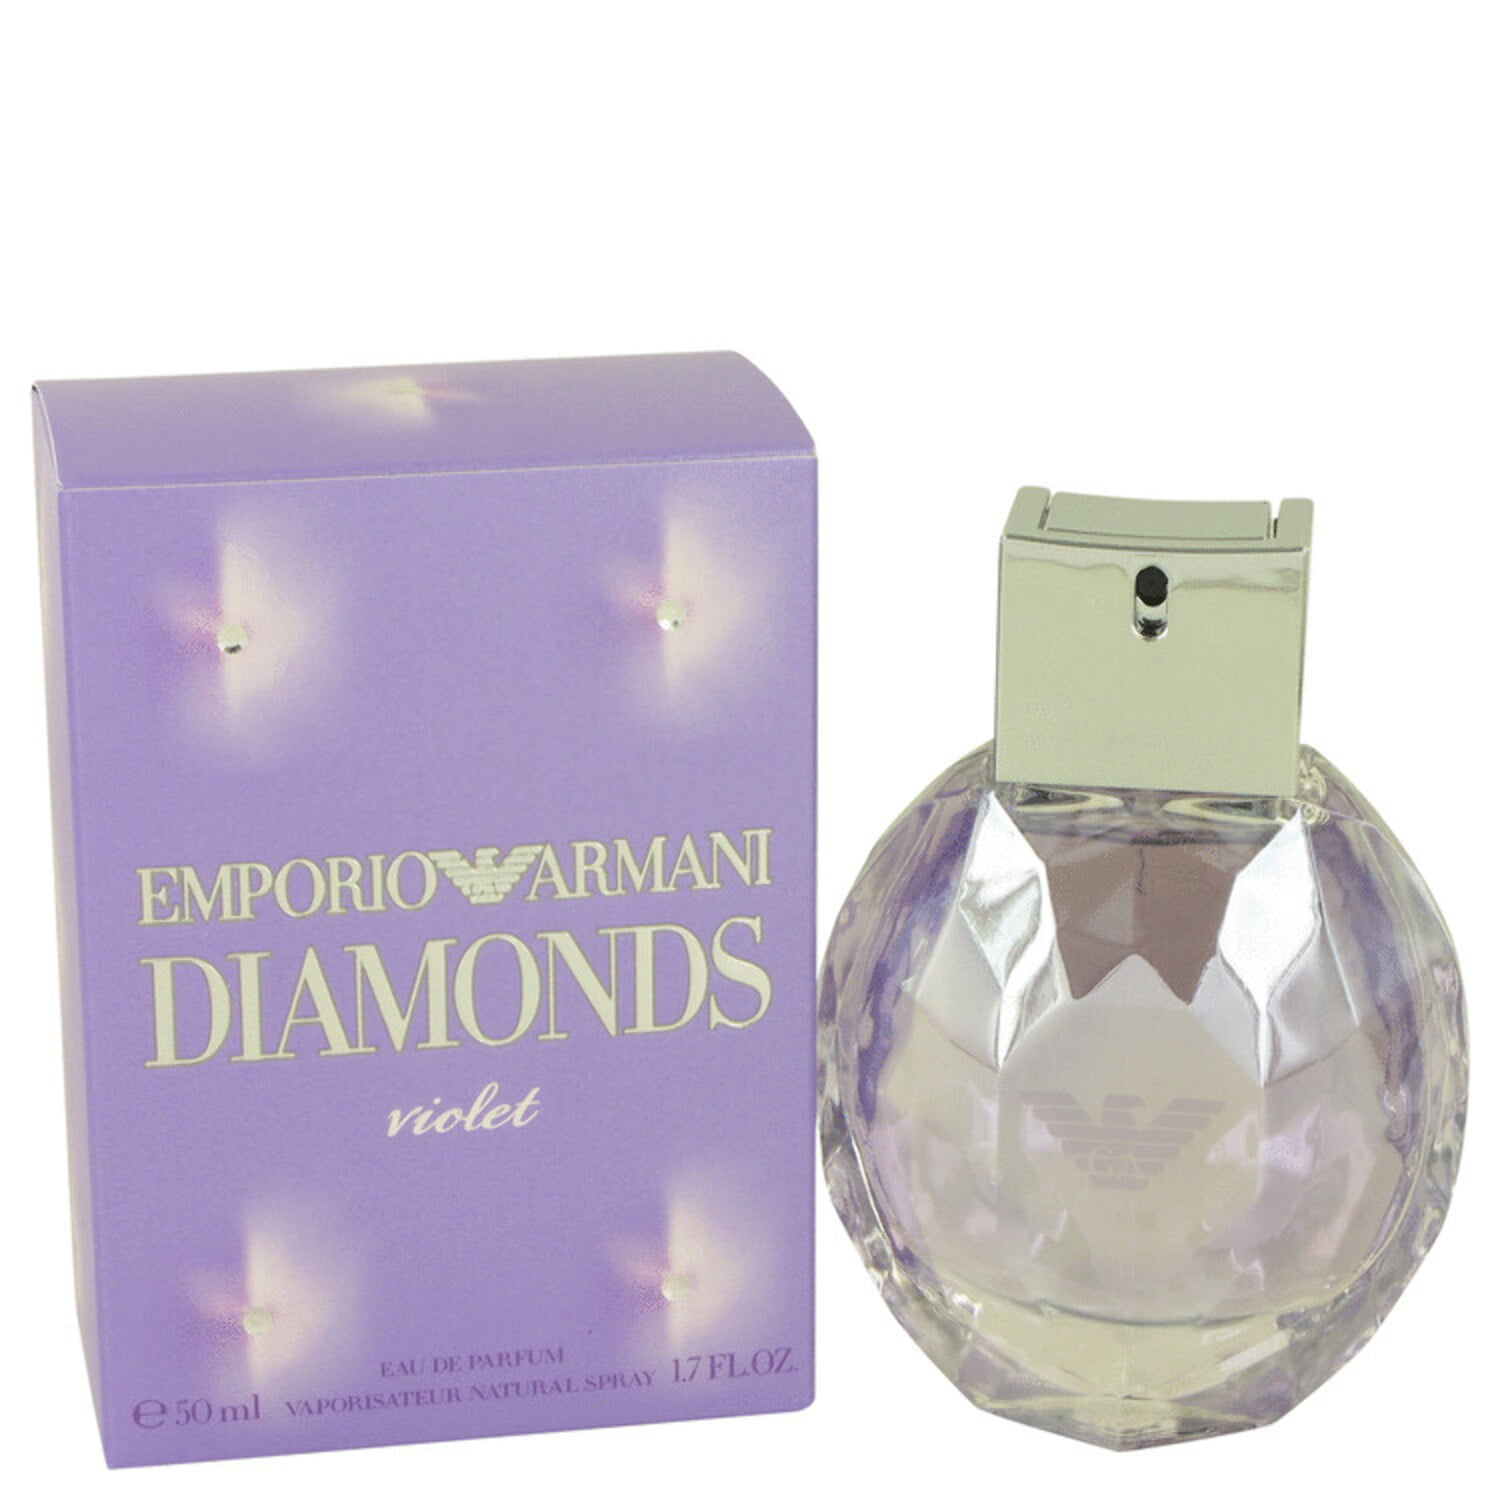 Emporio Armani Diamonds Violet Eau de Parfum, Perfume for Women,  Oz  Full Size 